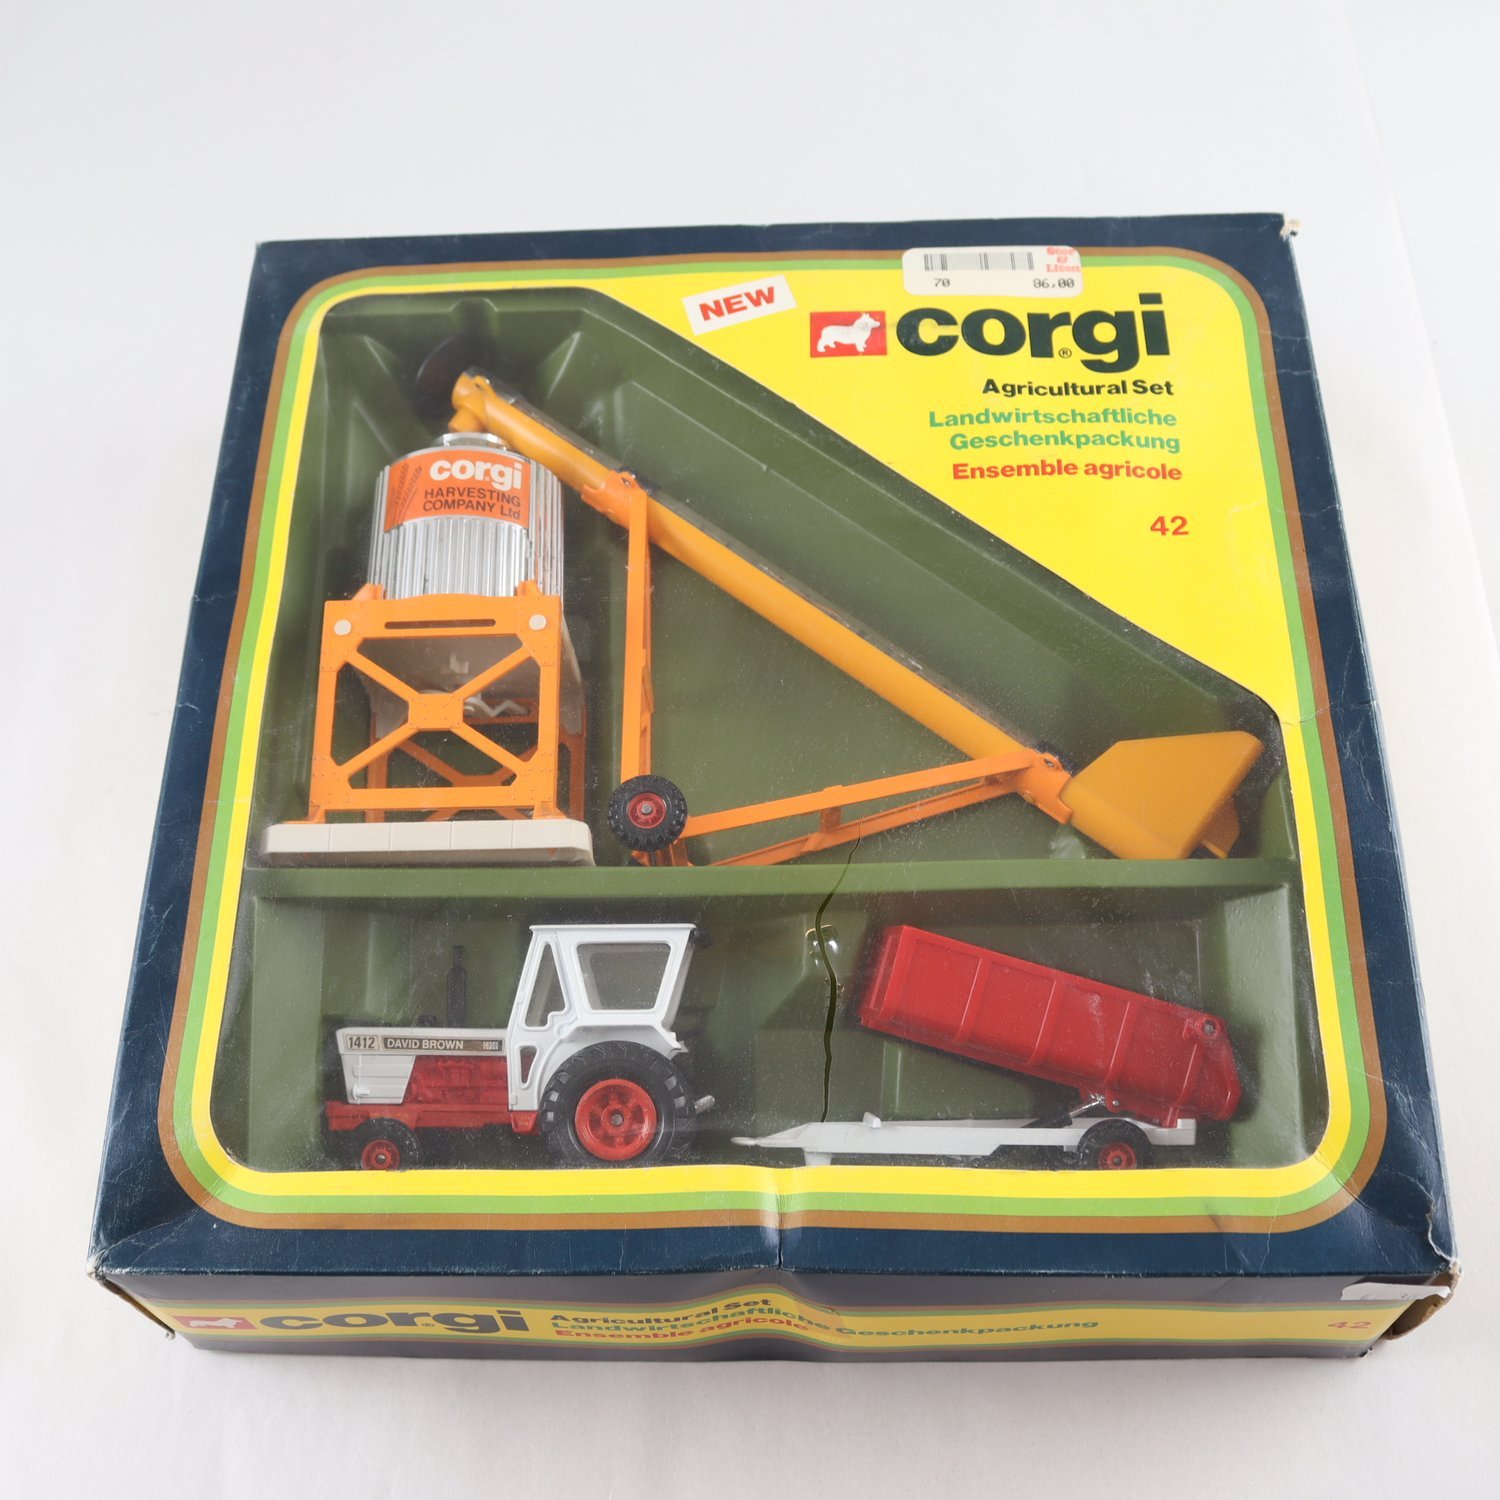 Traktor, Corgi agricultural set, i org ask.